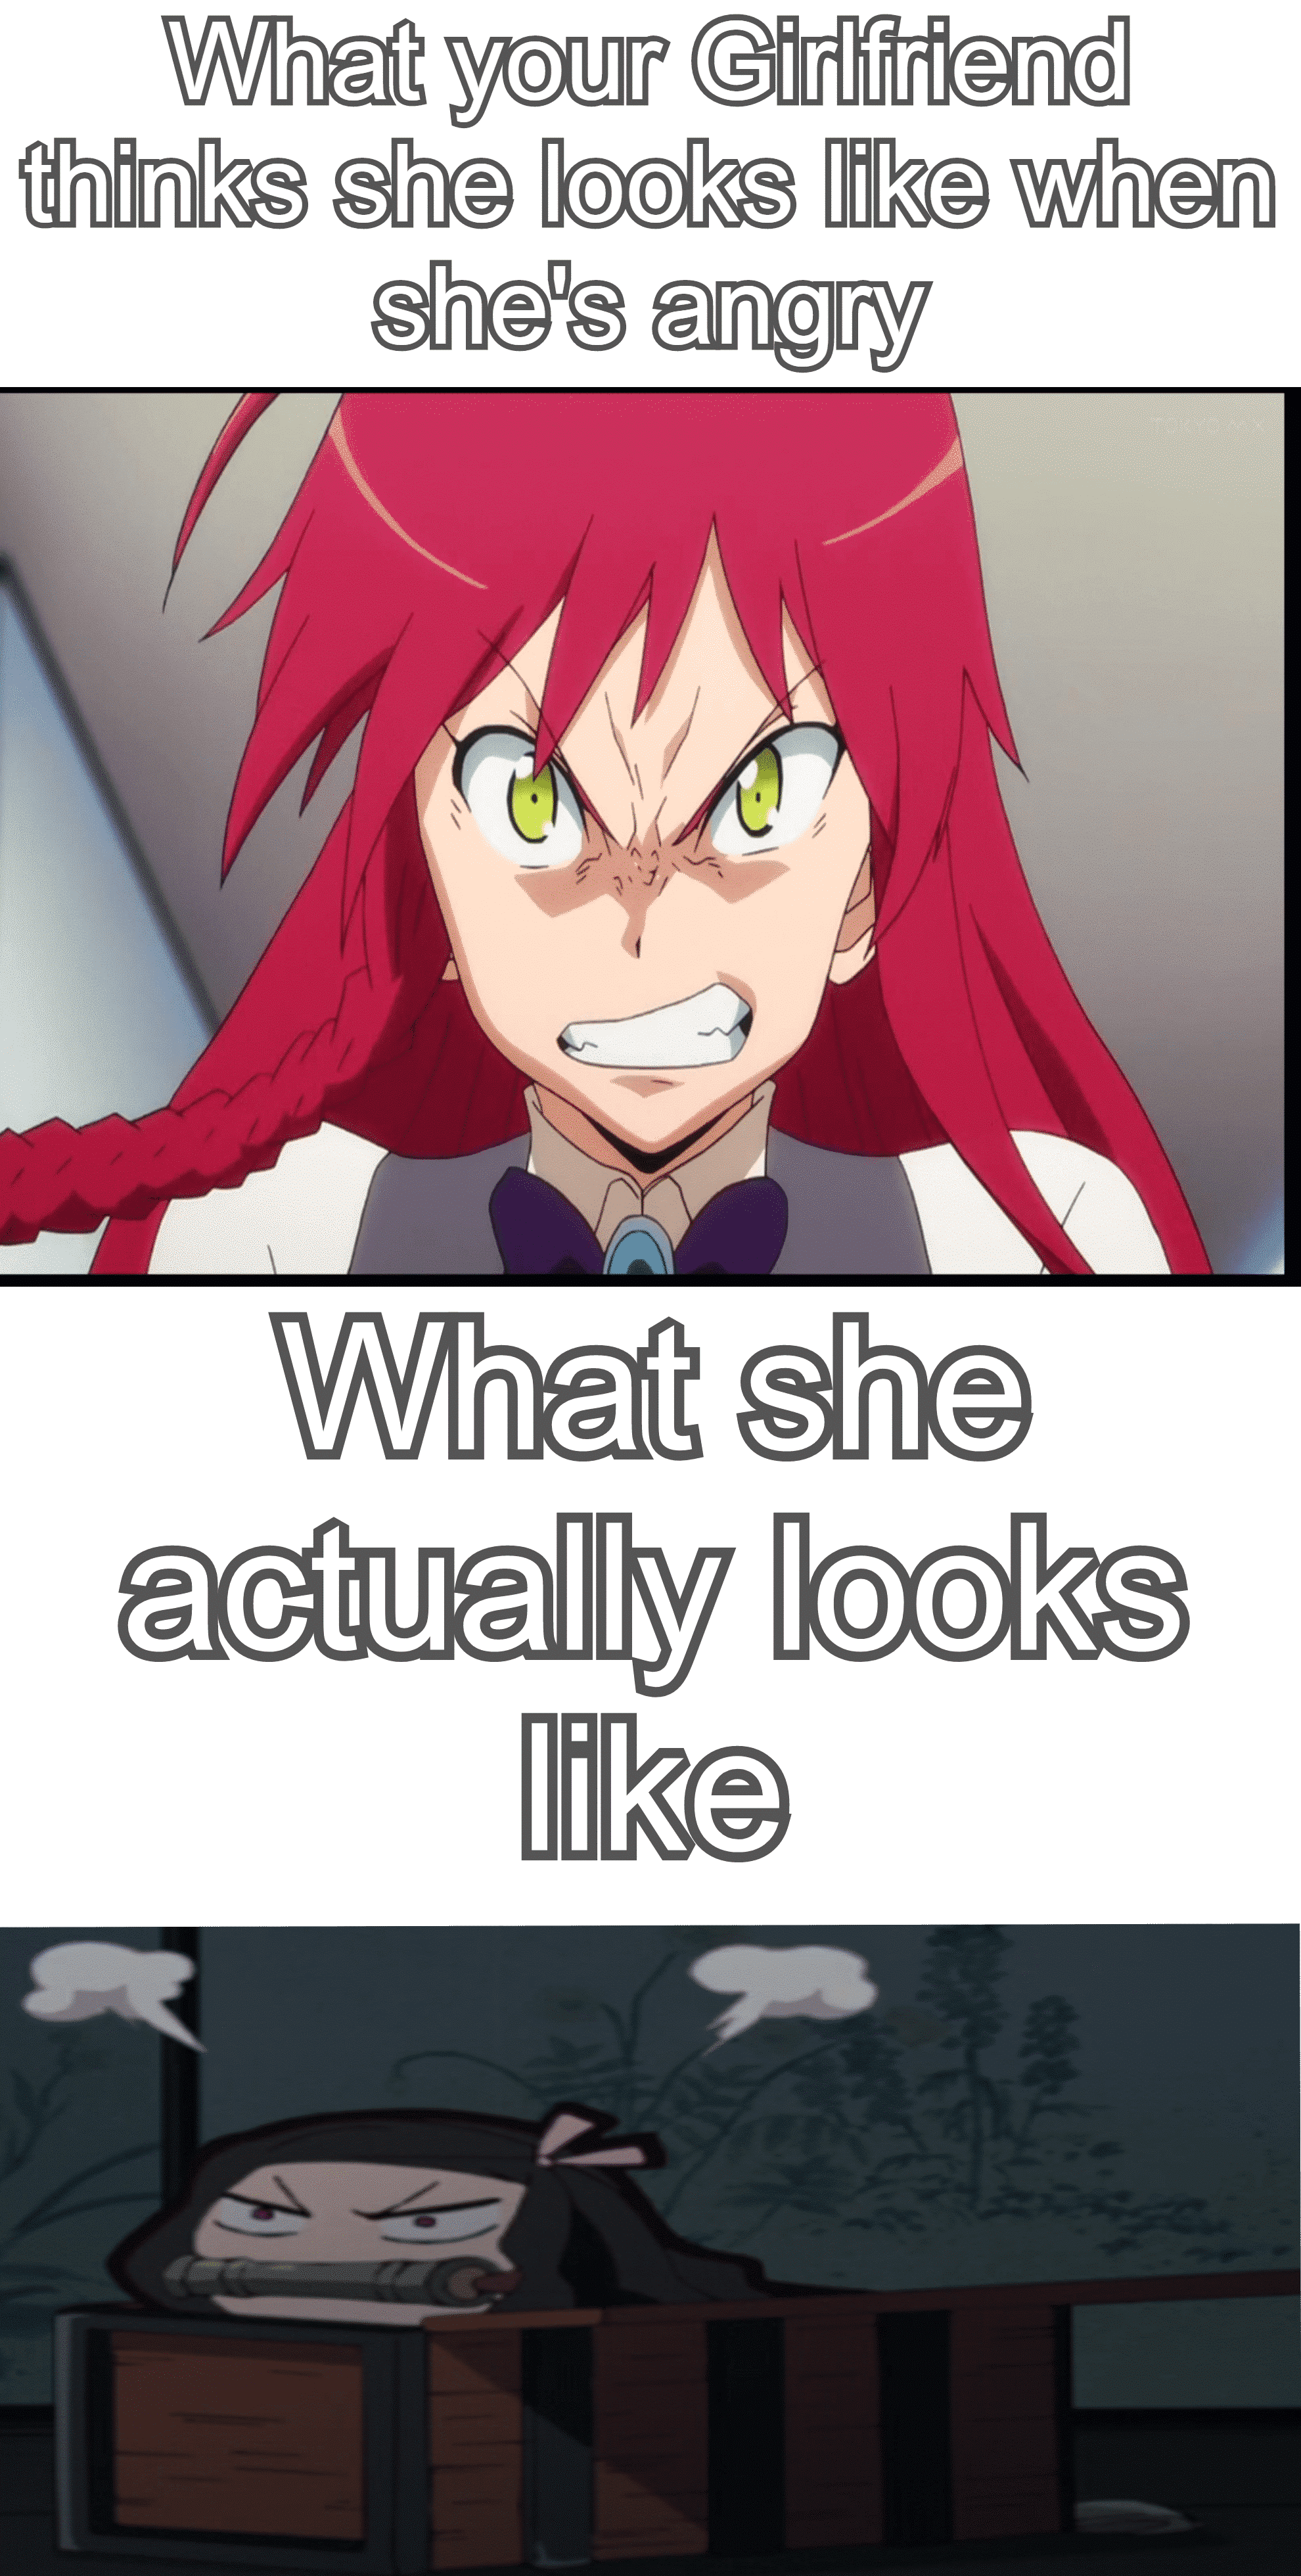 anime anime-memes anime text: Güend tdnls she Idke when sheOs What she boos 